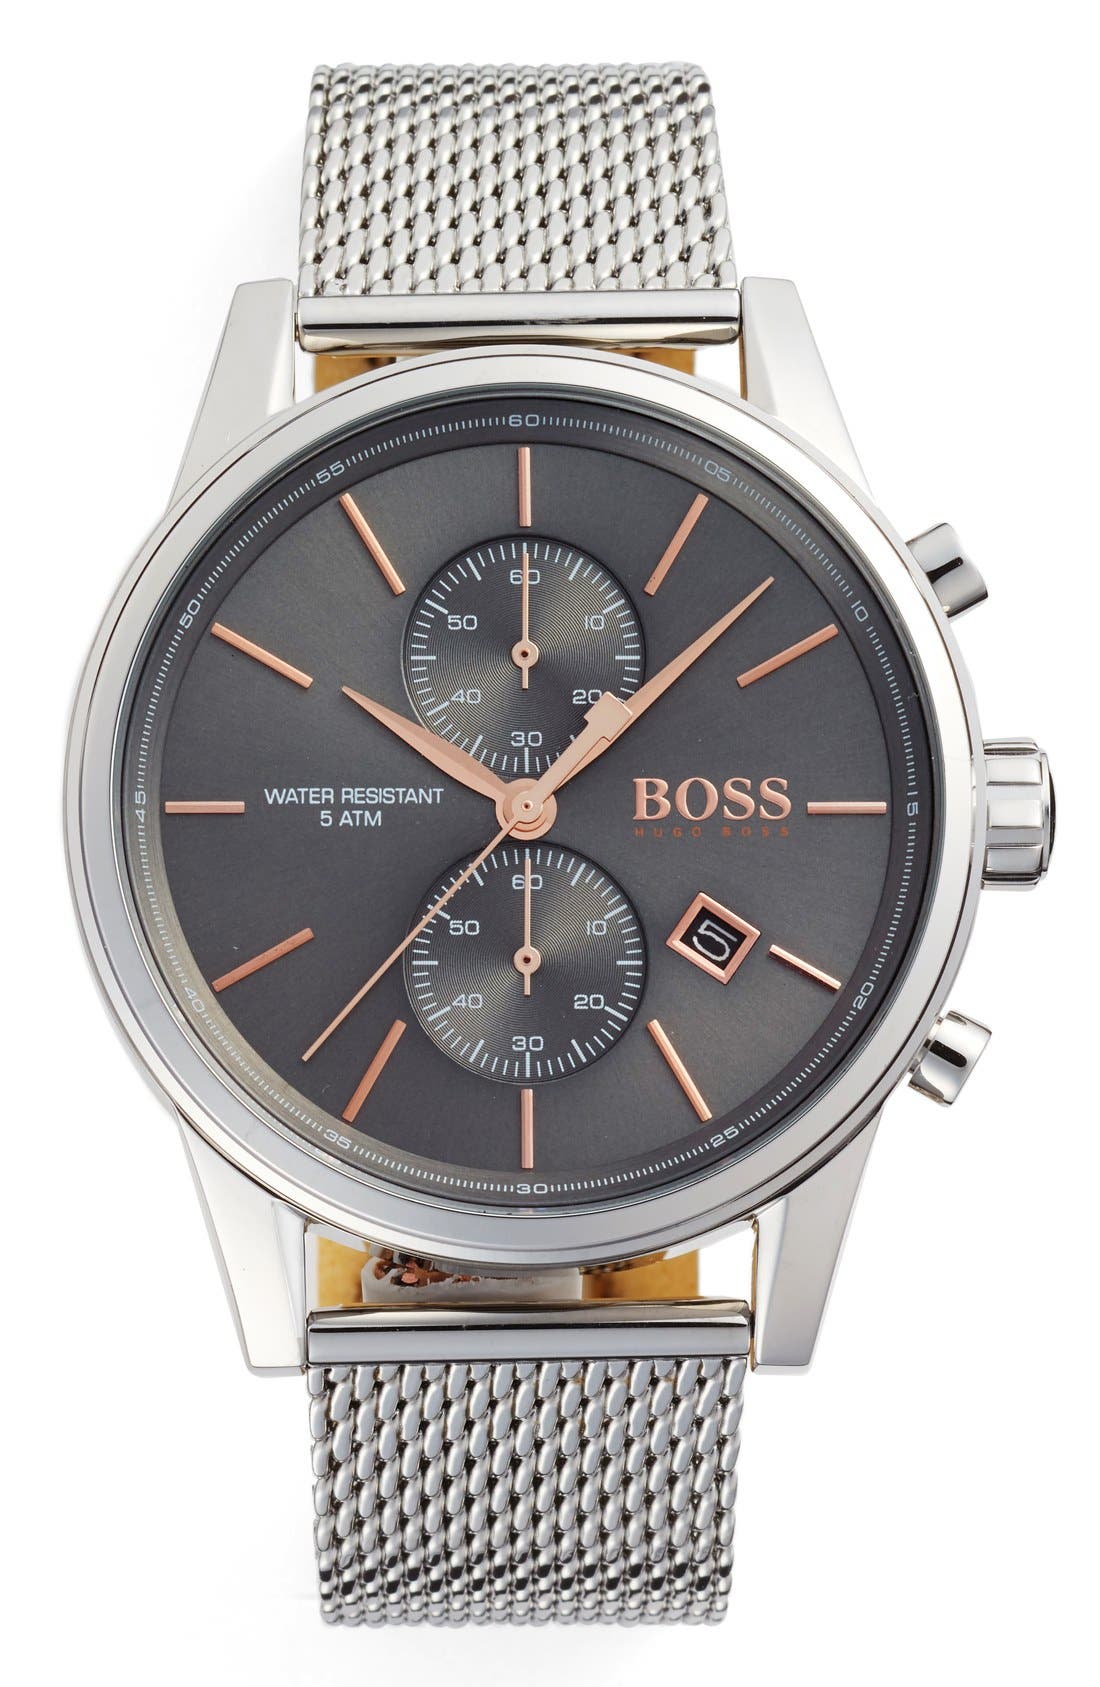 hugo boss jet men's stainless steel bracelet watch